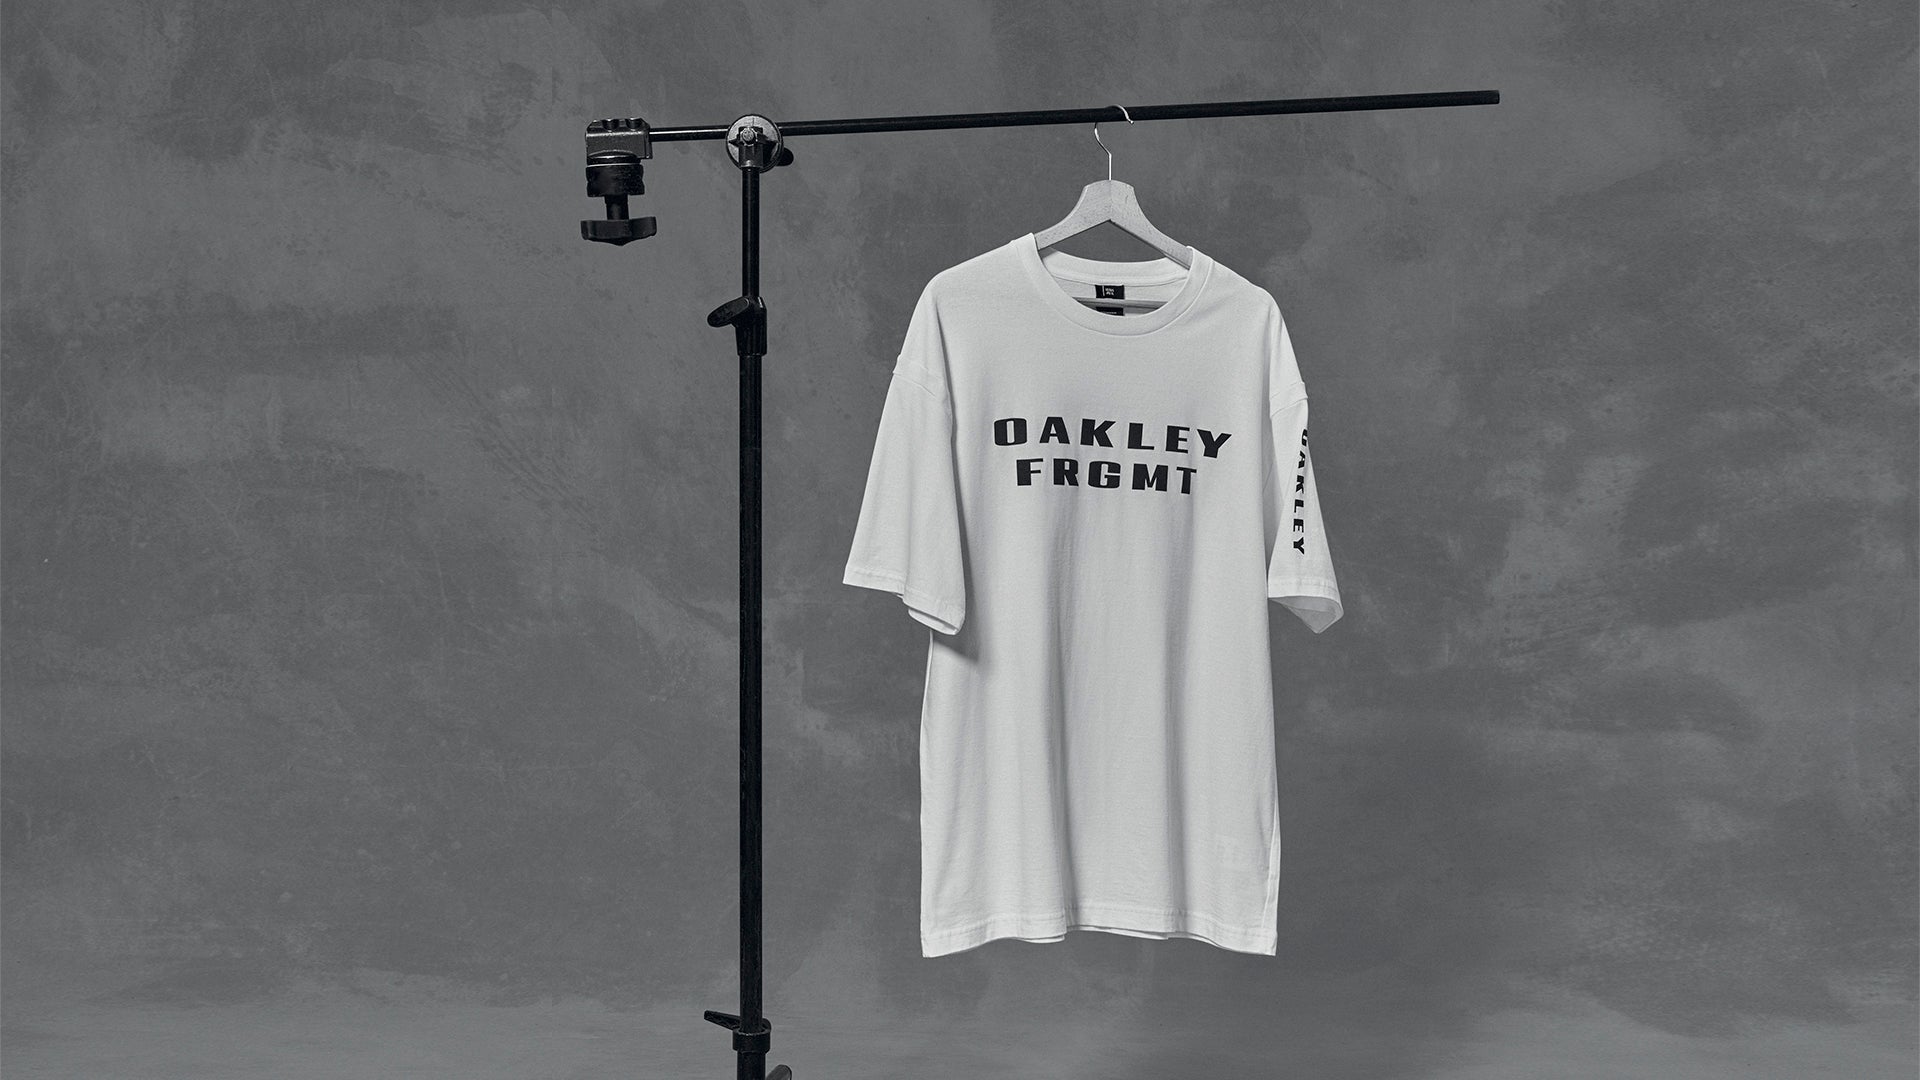 OAKLEY X FRAGMENT HOODIE - WHITE